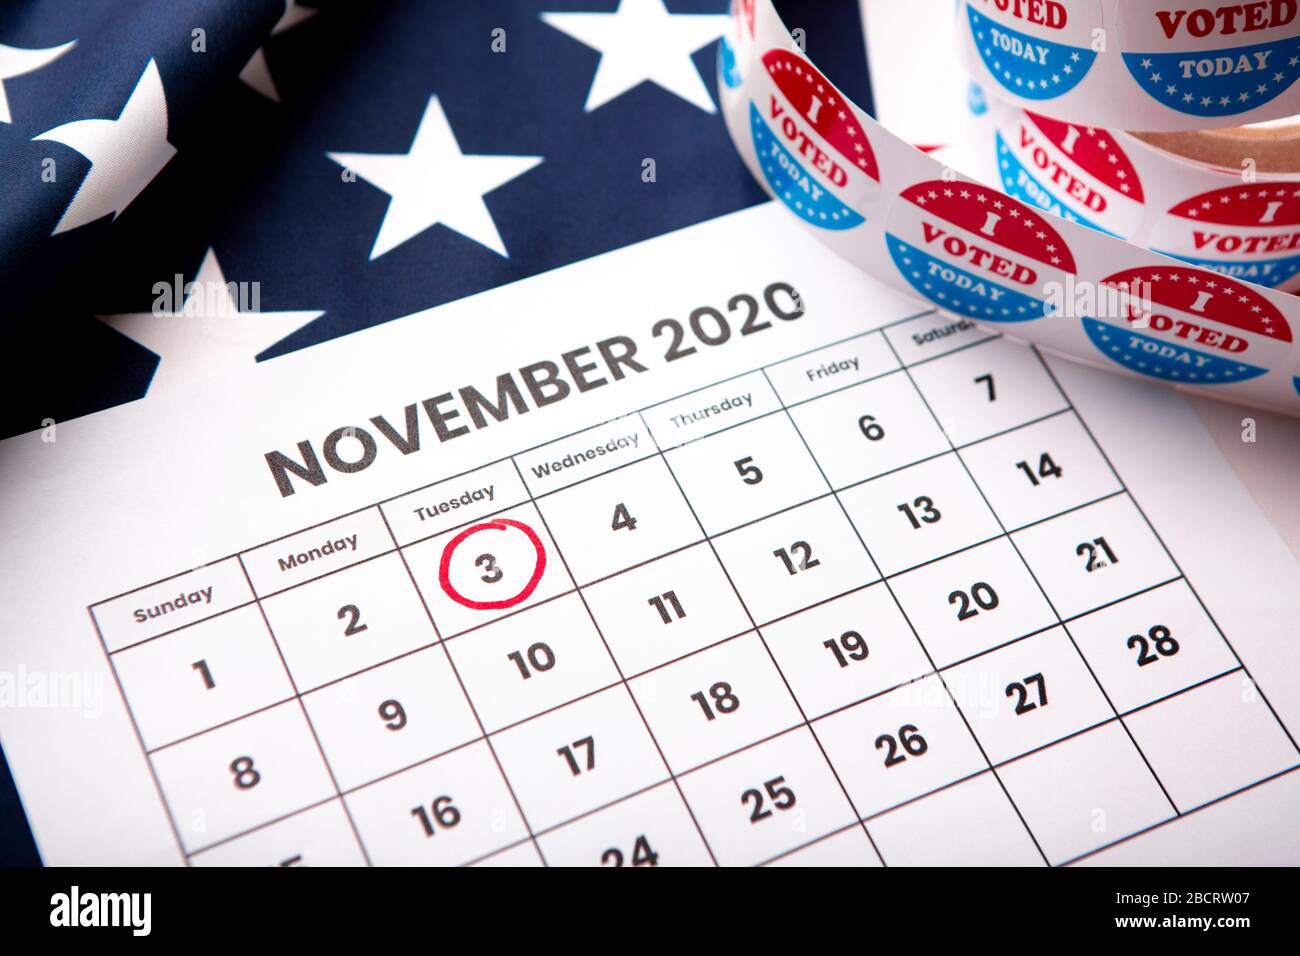 November 2020 presidential election date on calendar concept Stock Photo -  Alamy